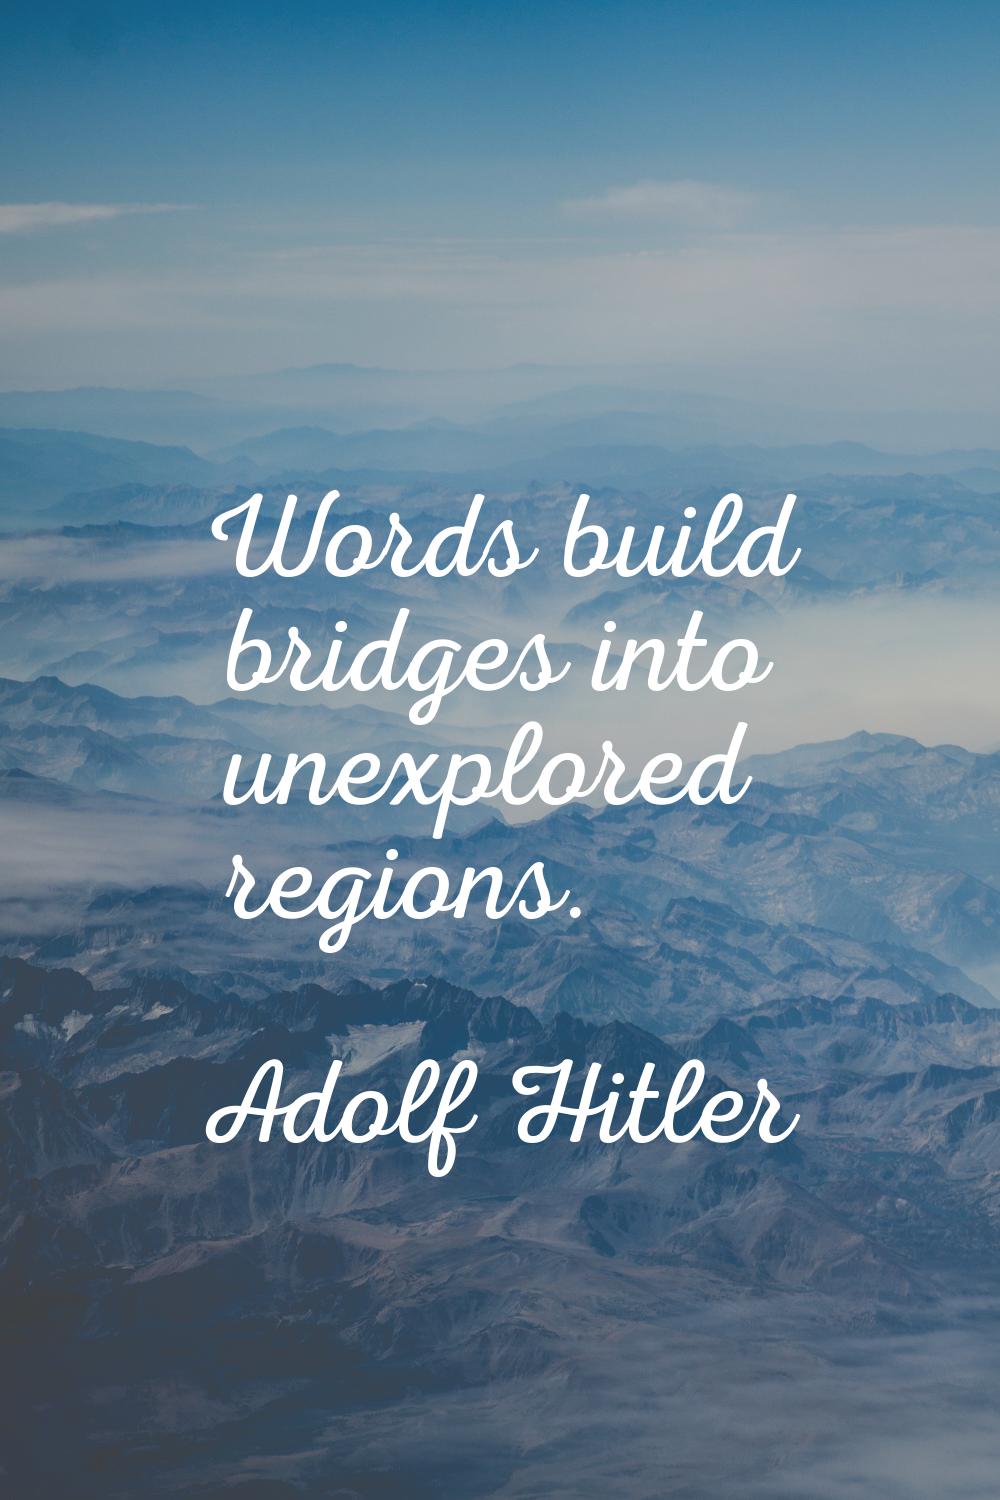 Words build bridges into unexplored regions.